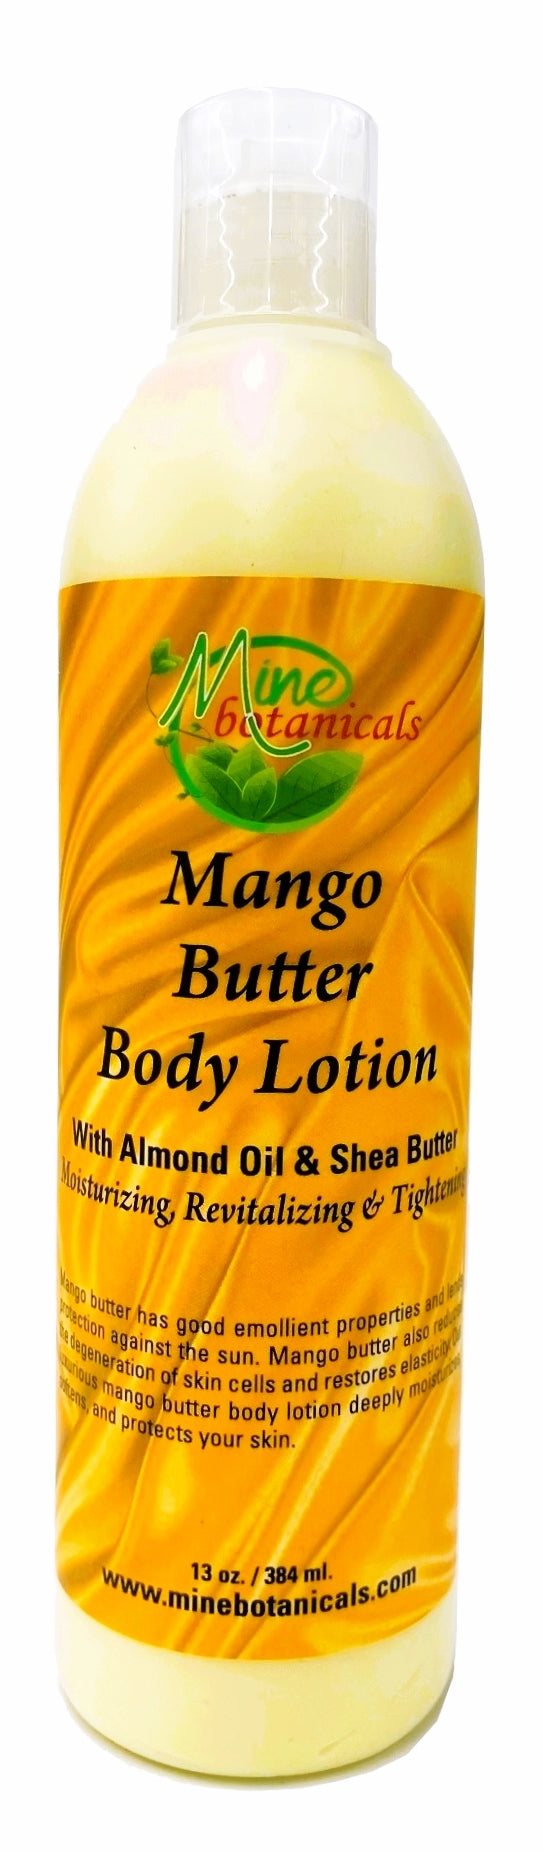 Mango Butter Body Lotion